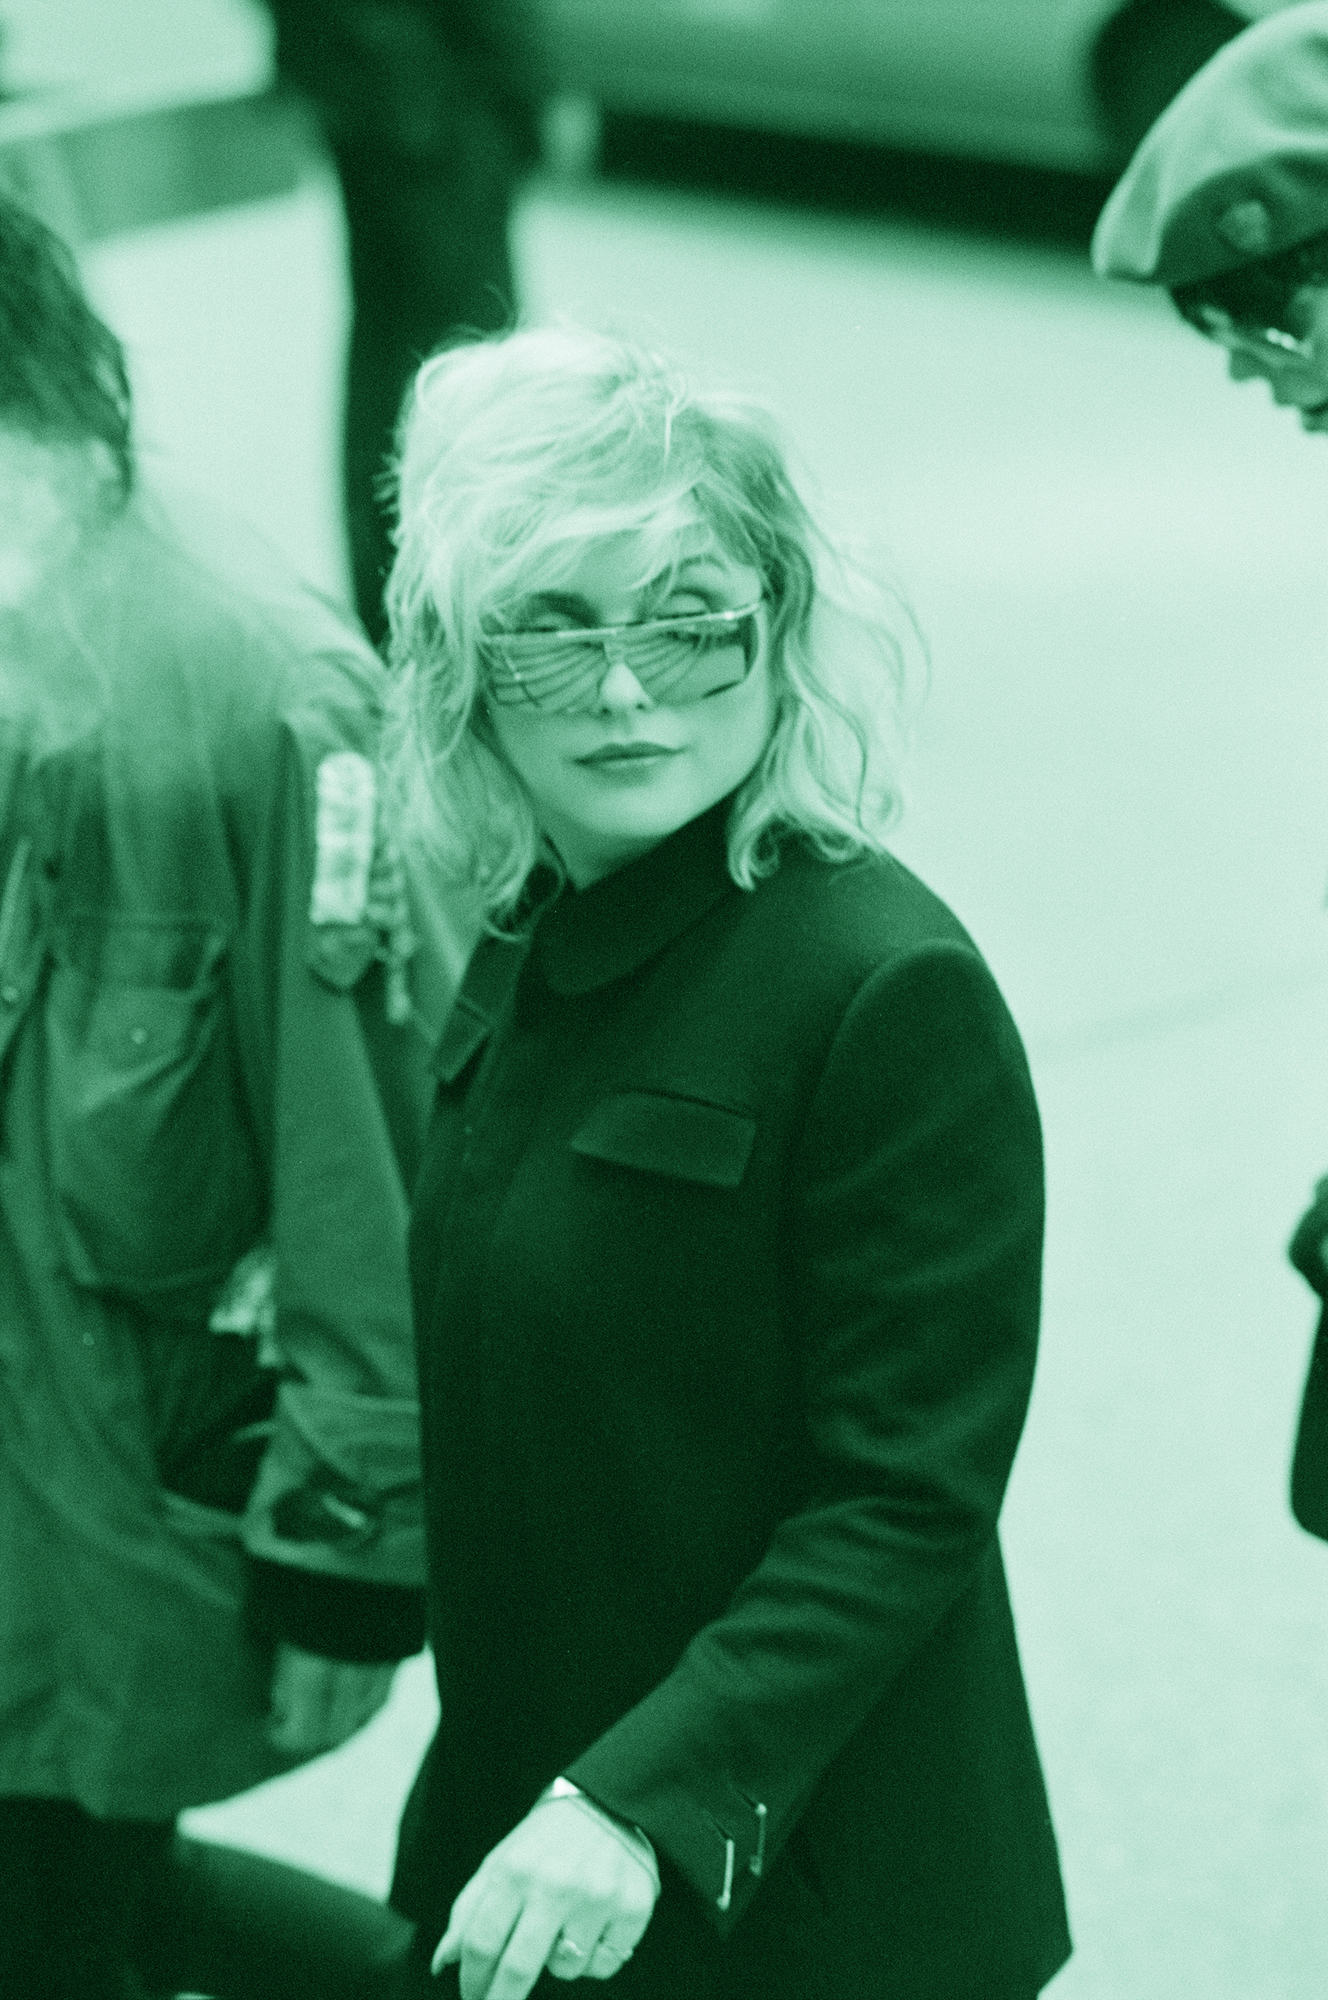 Blondie at Warhol's memorial. Photo by Christophe Von Hohenberg.